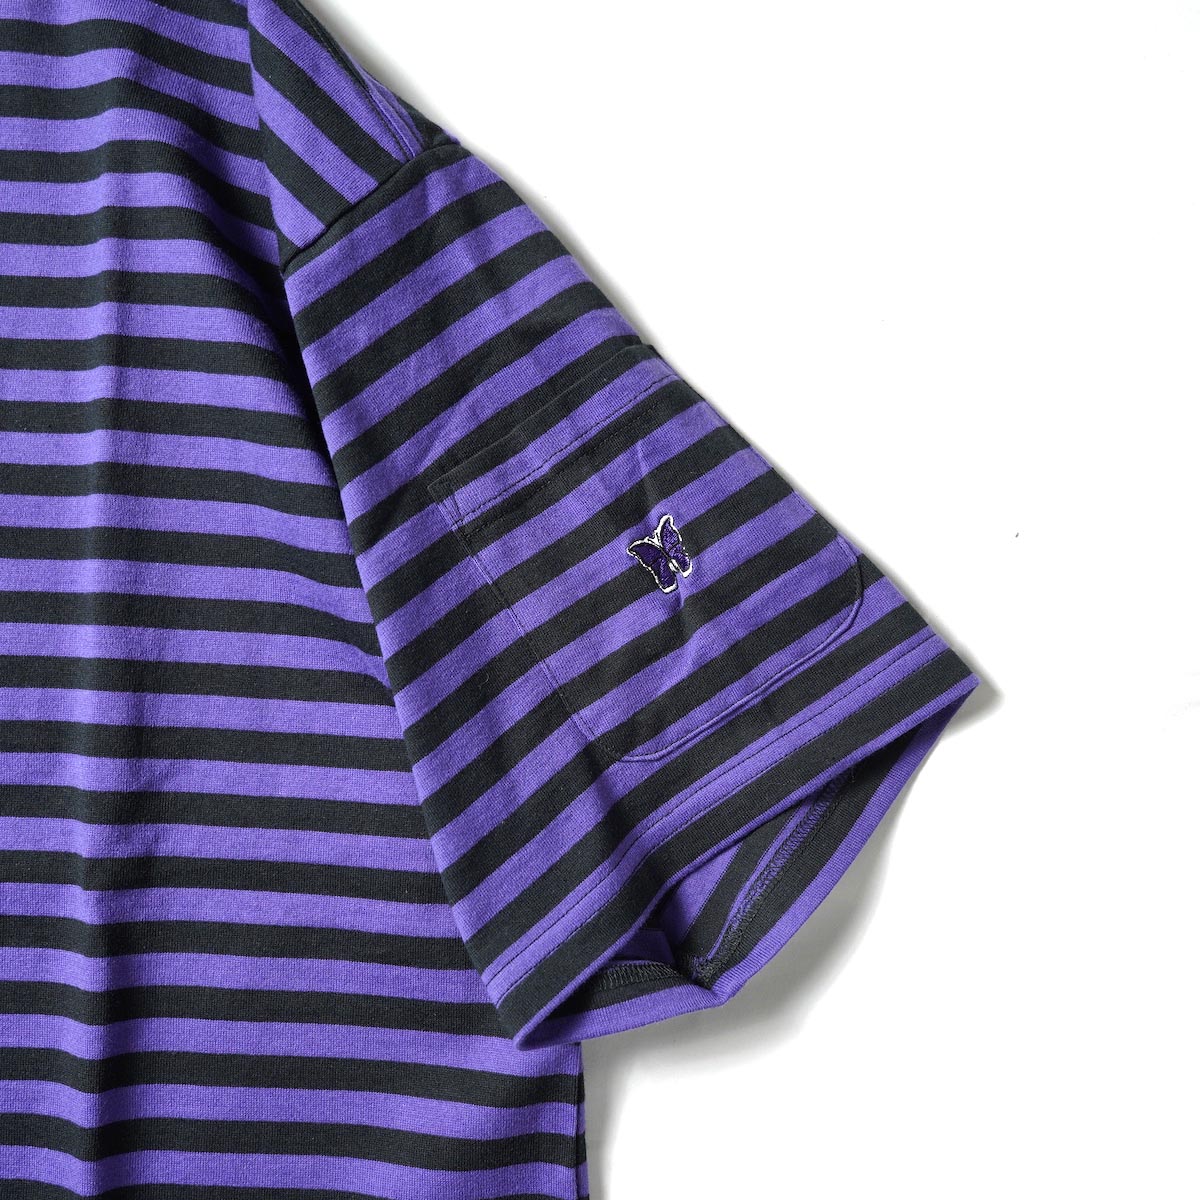 Needles / S/S Crew Neck Tee - Cotton Stripe Jersey (Black/Purple)袖